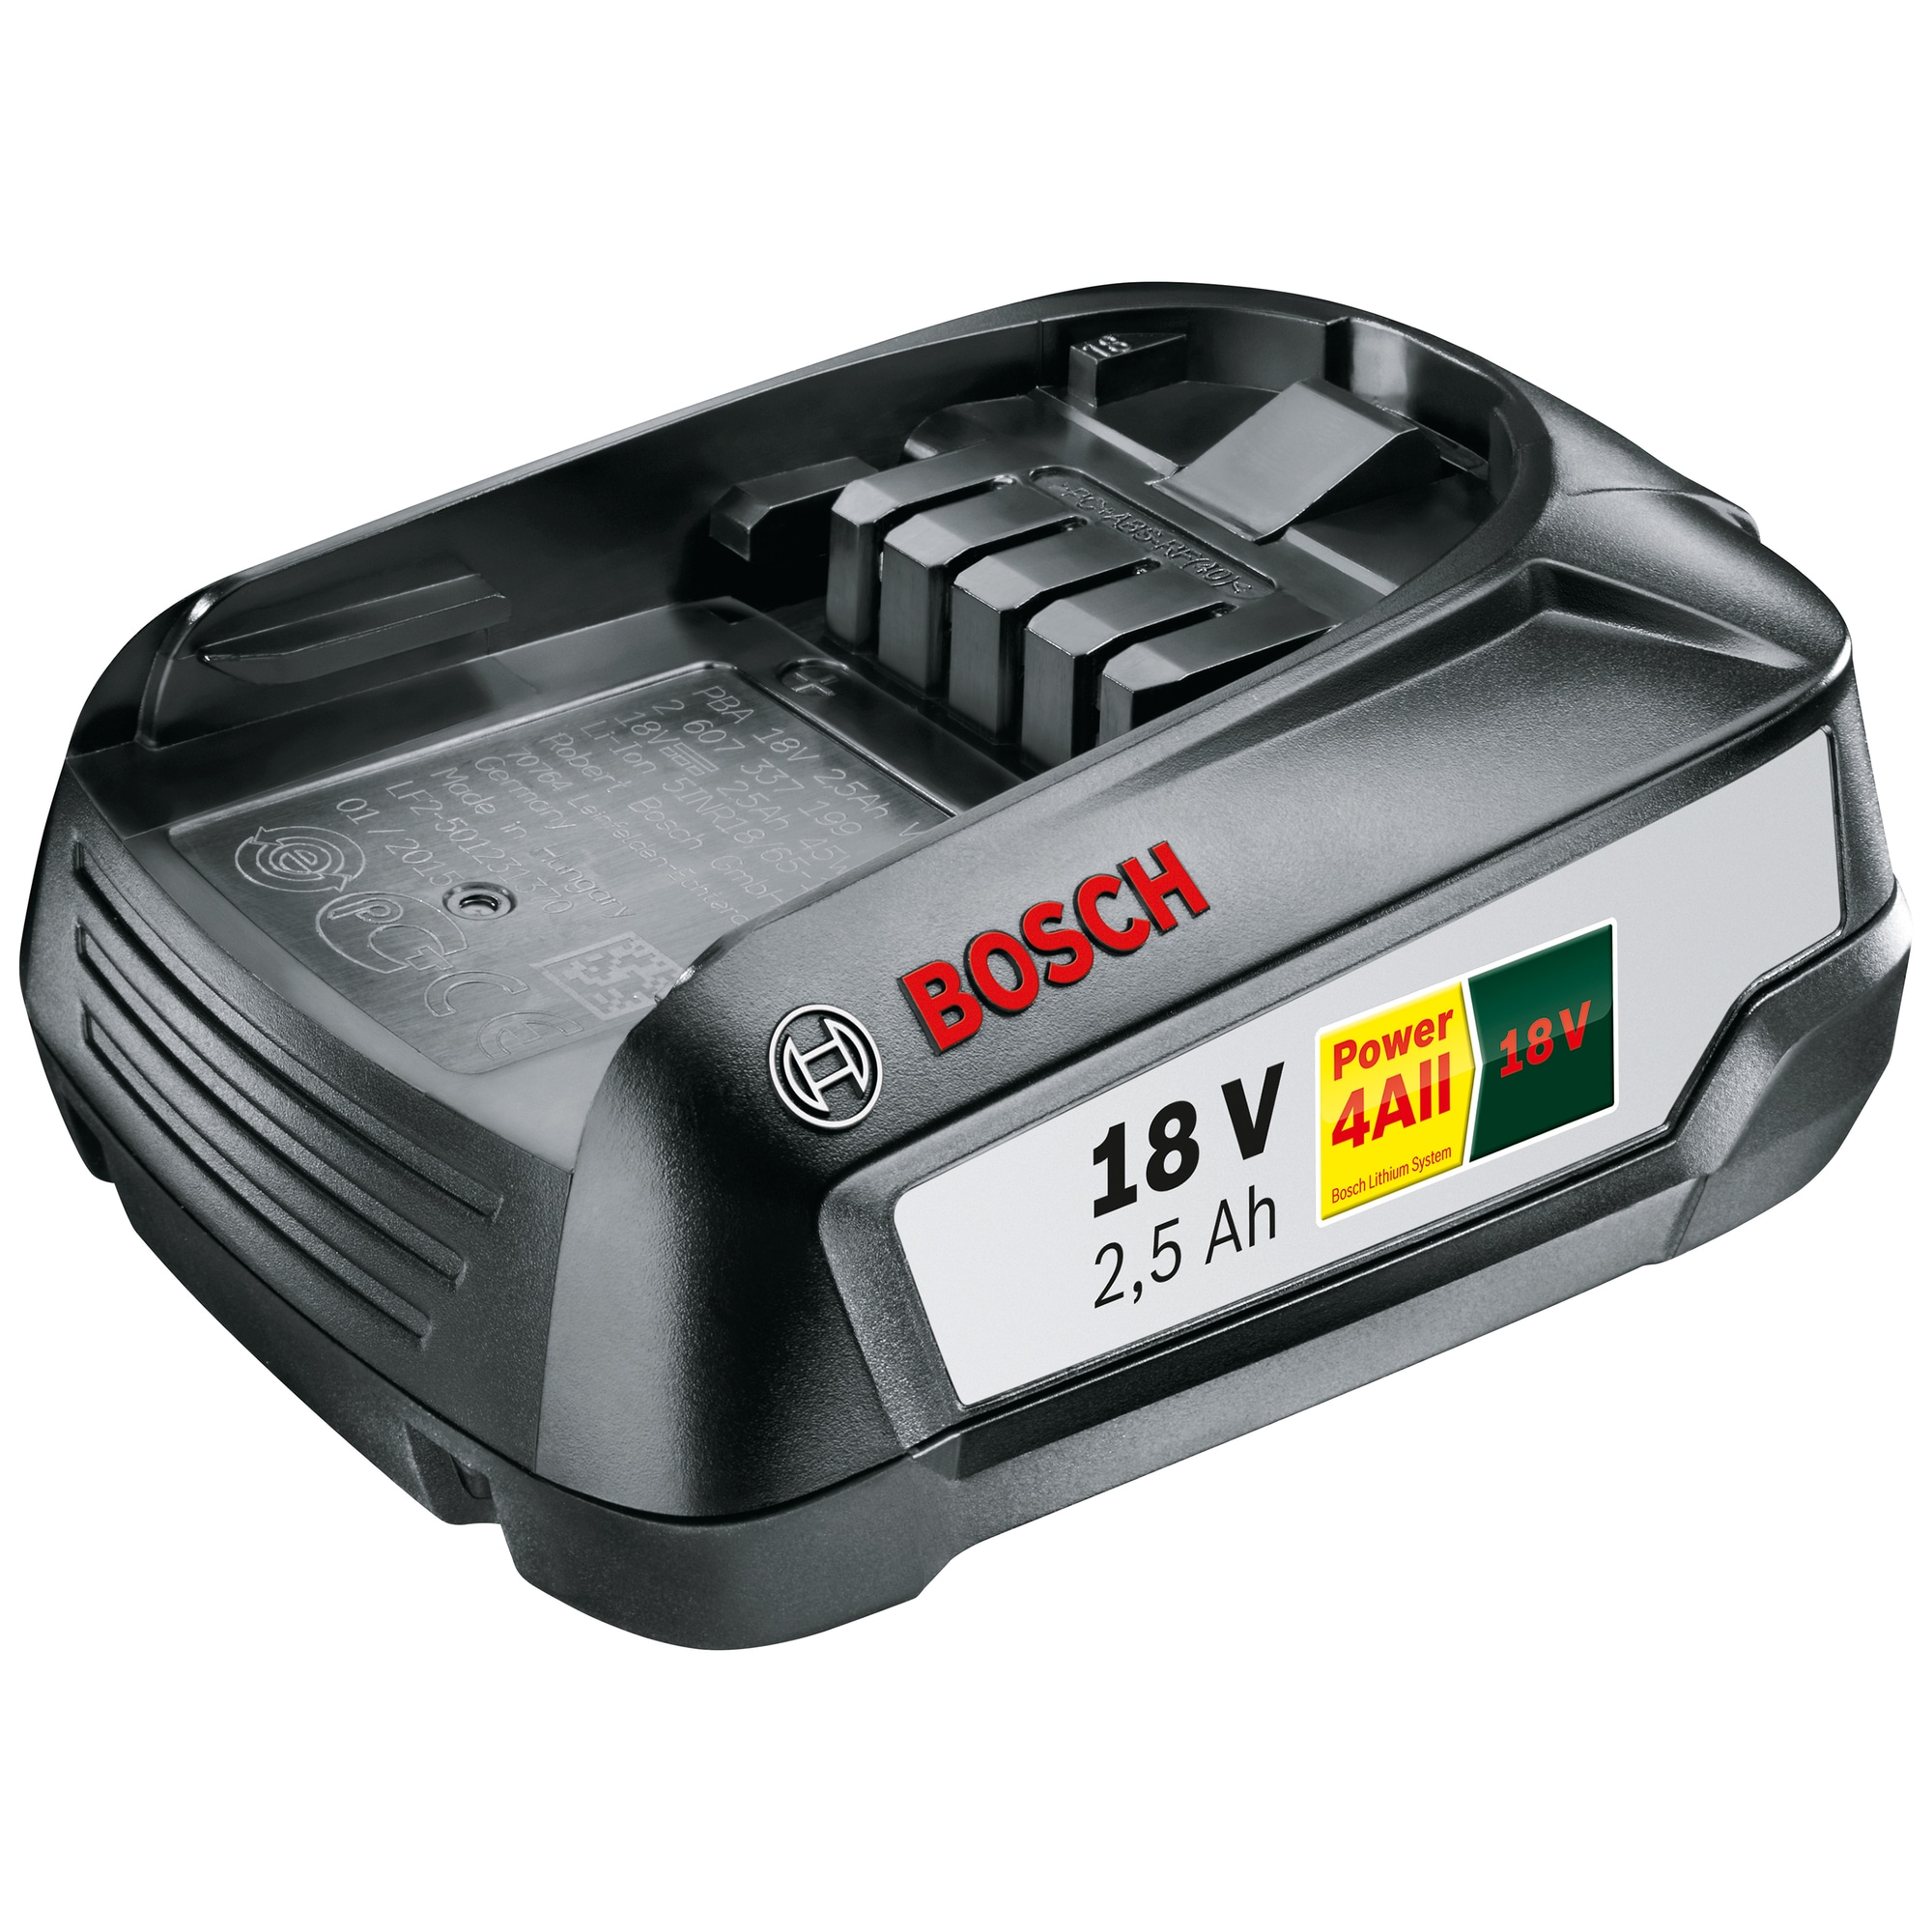 Bosch batteri PBA 18V 2,5Ah W-B 1600A005B0 thumbnail